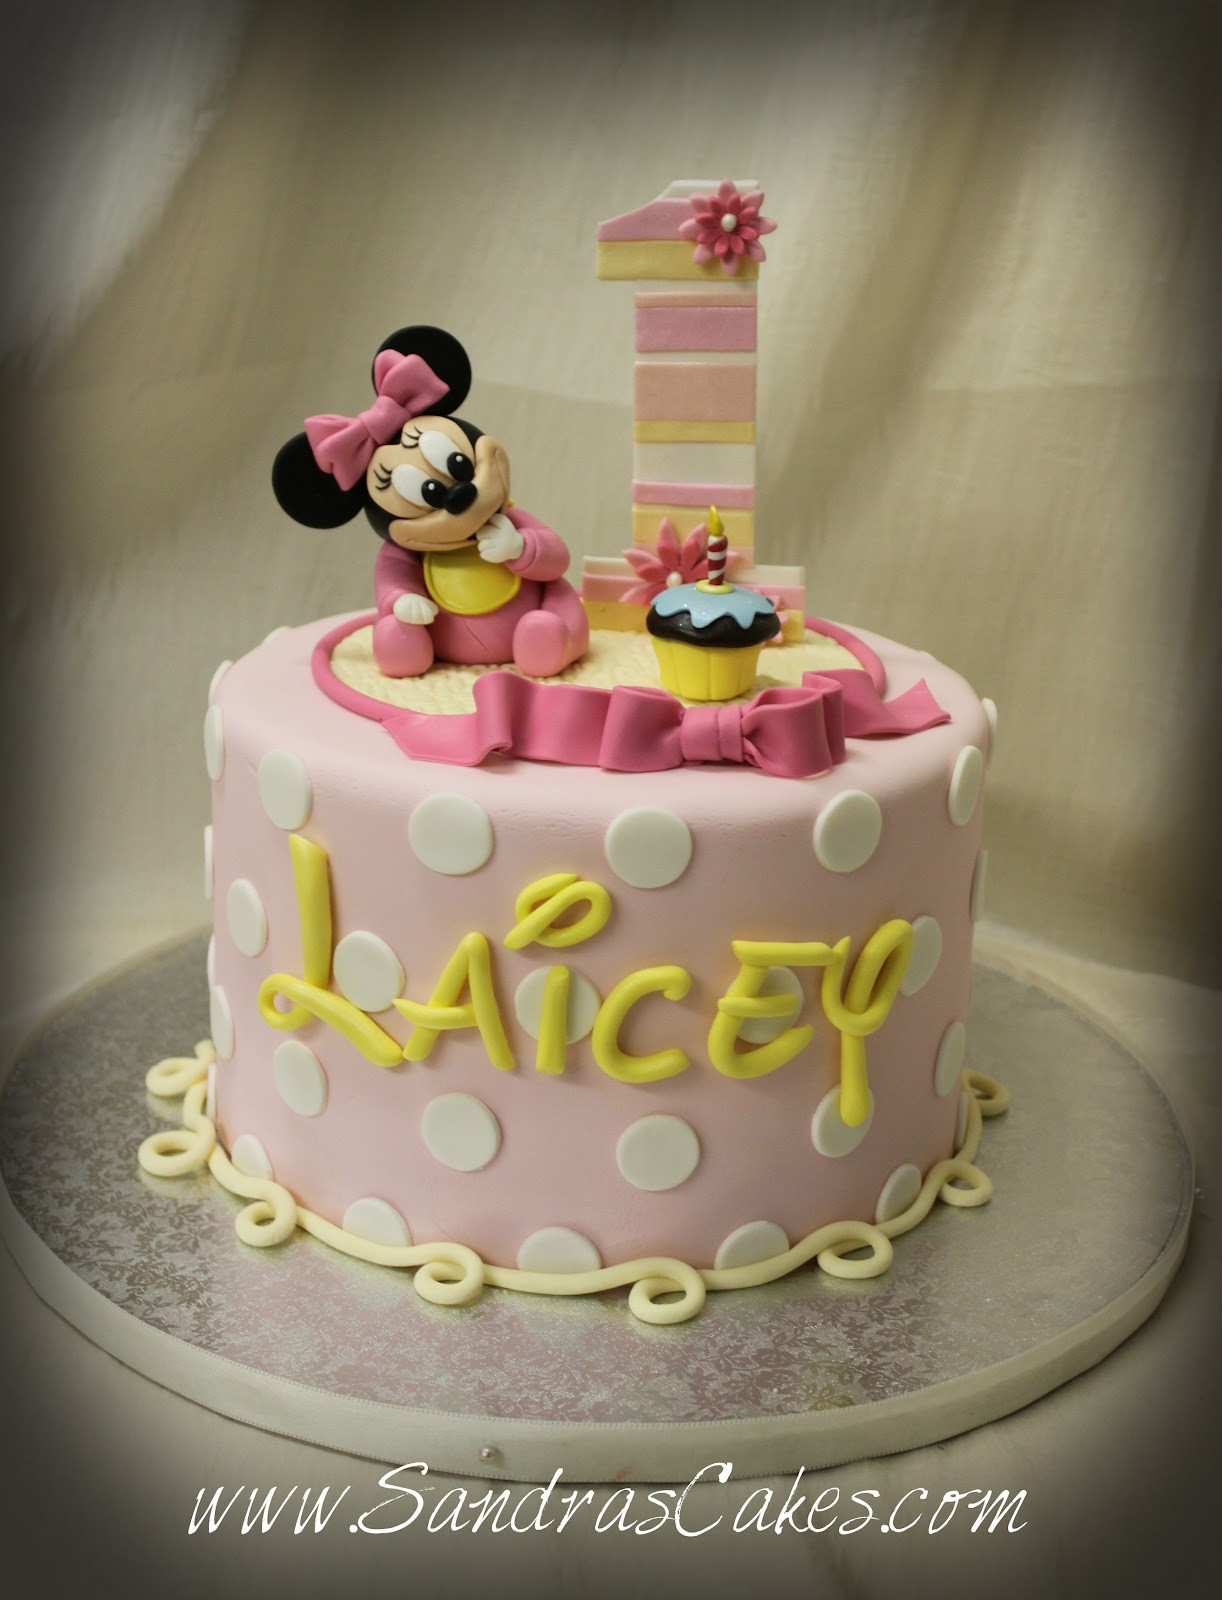 Best ideas about Minnie Birthday Cake
. Save or Pin 1st Birthday Minnie Cake Now.